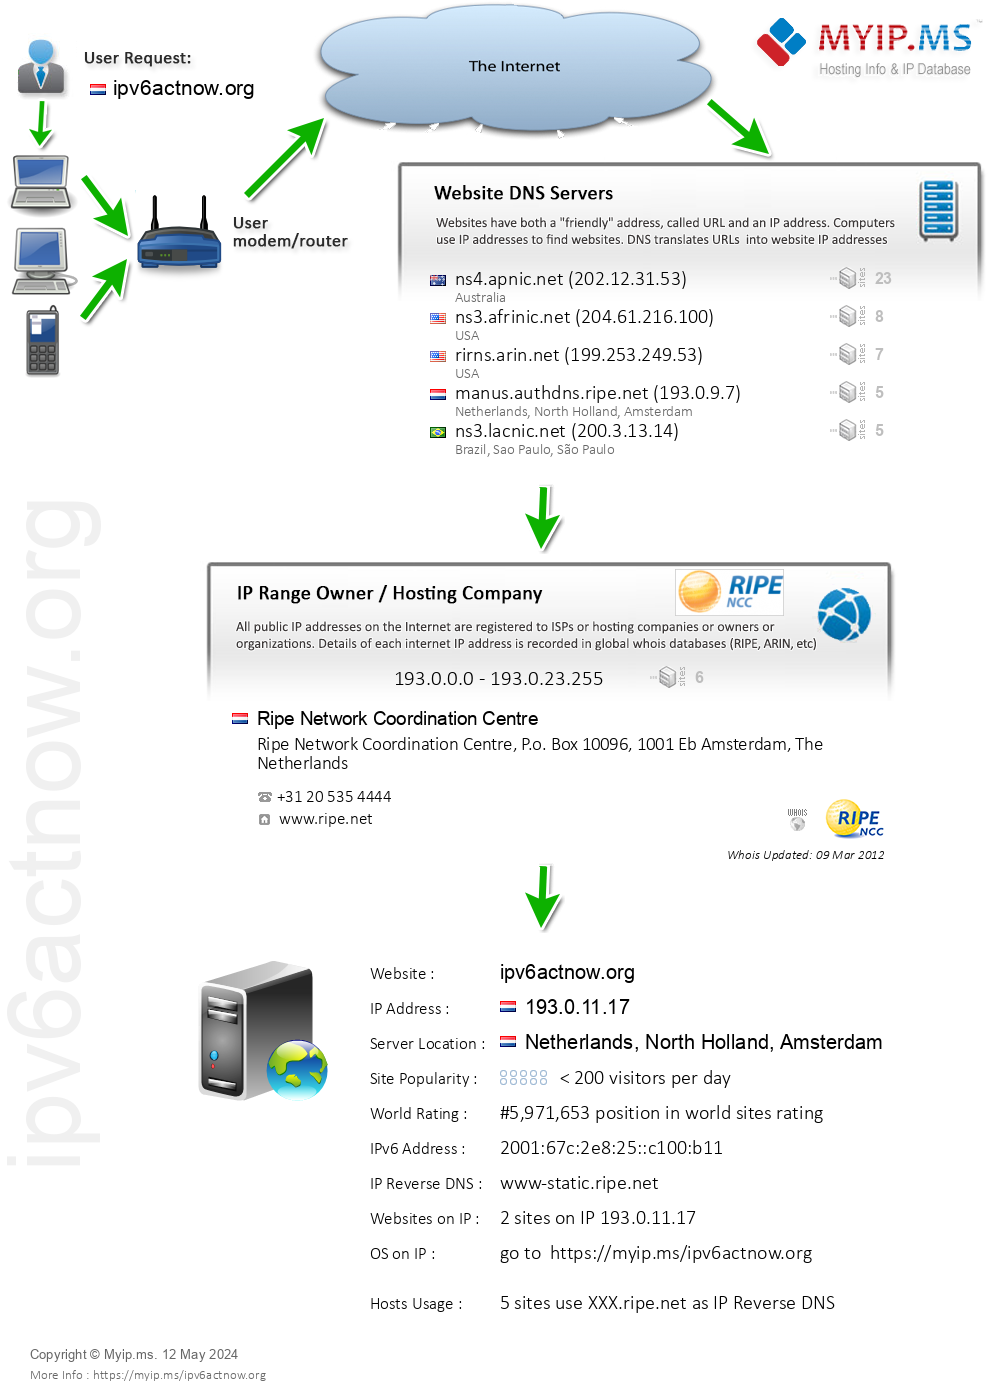 Ipv6actnow.org - Website Hosting Visual IP Diagram